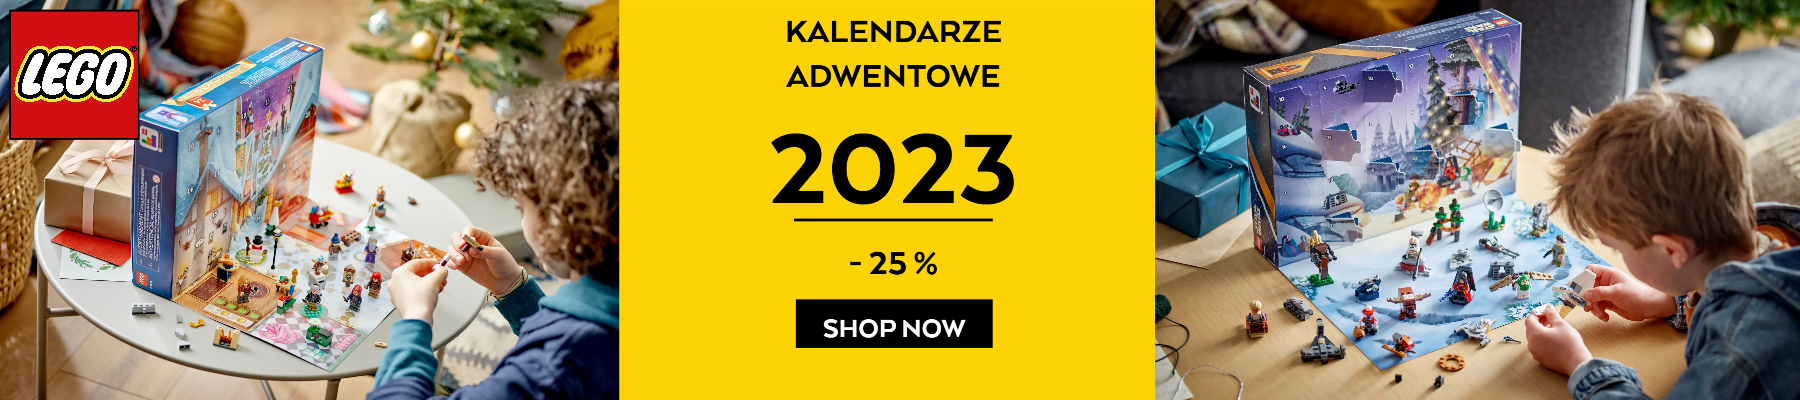 Kalendarze adwentowe 2023 LEGO® | KITSTORE.pl